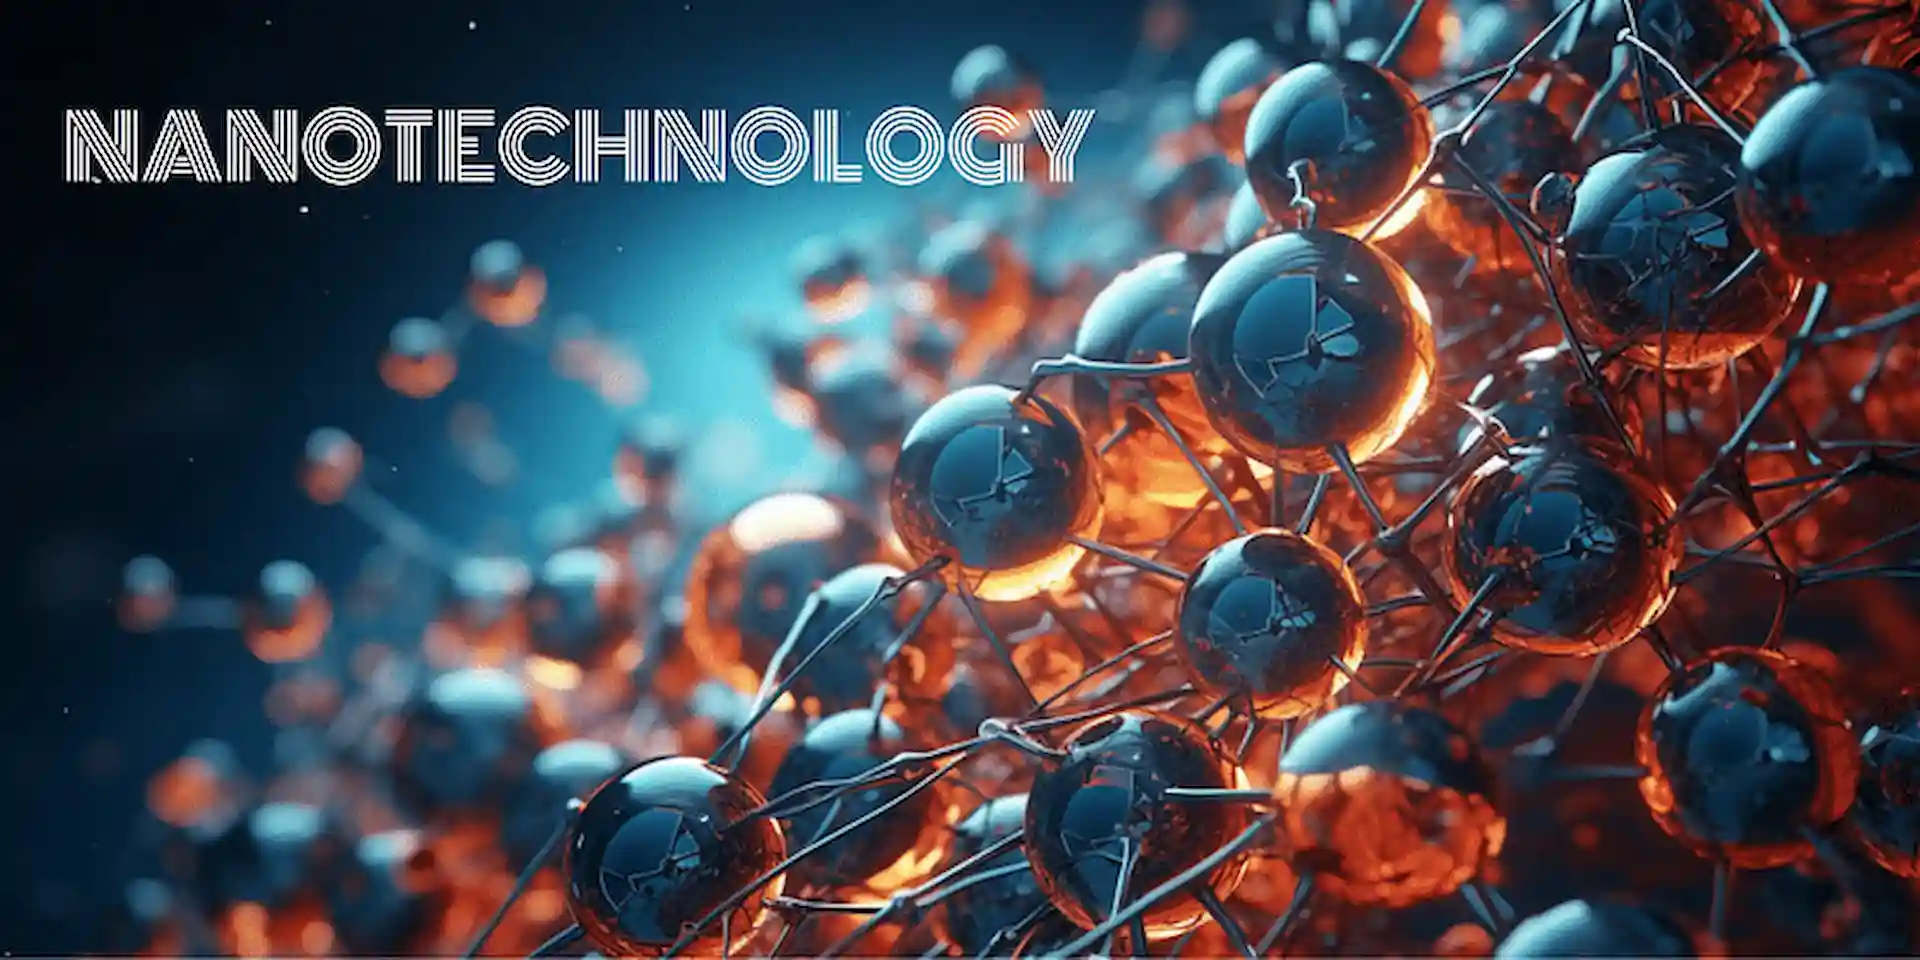 showing the image of nanotechnology